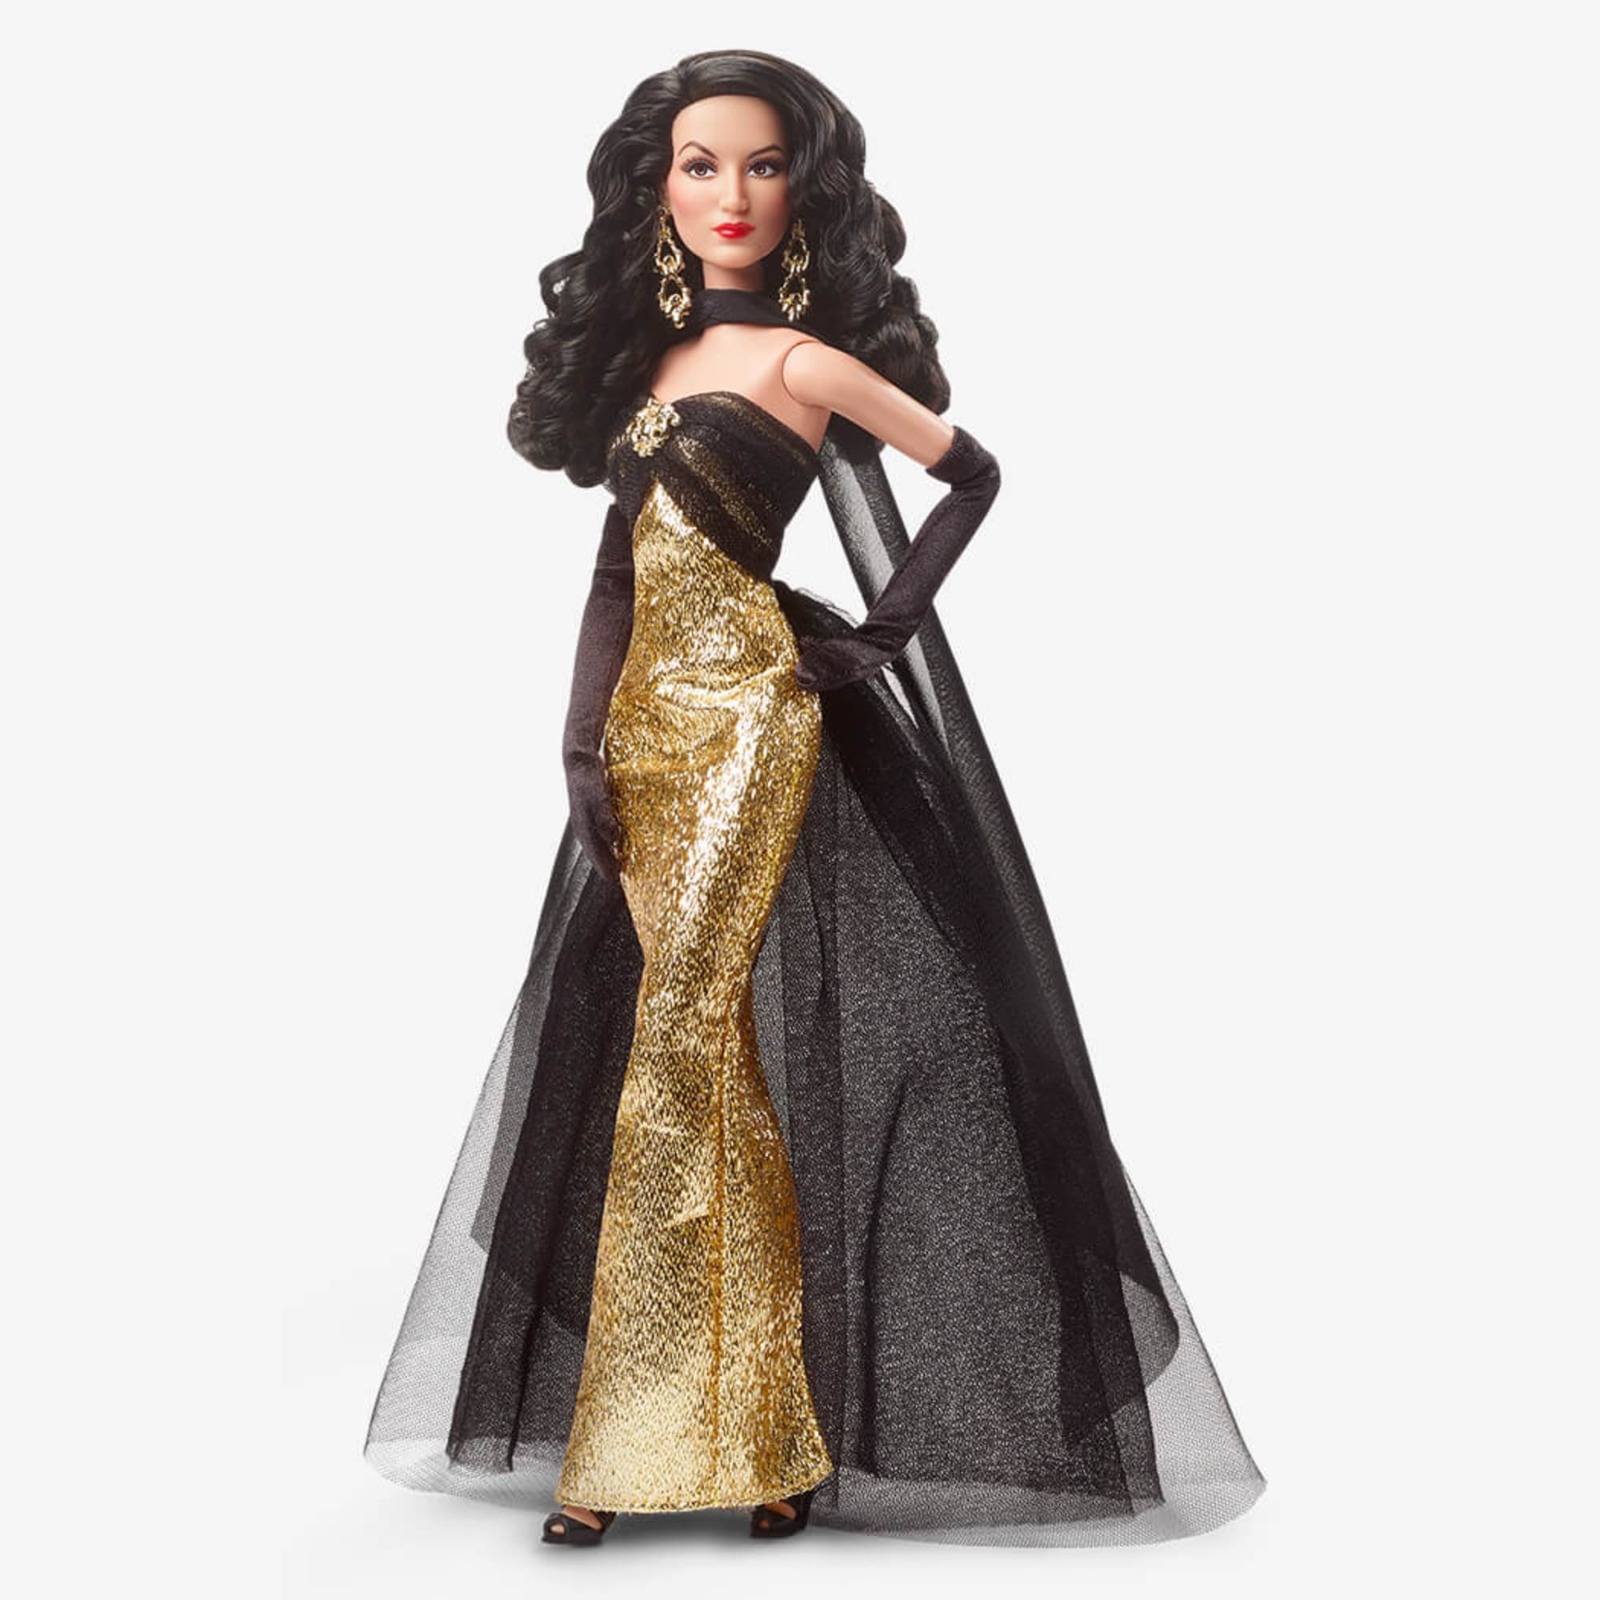 Mattel lanza Barbie de María Félix, así luce